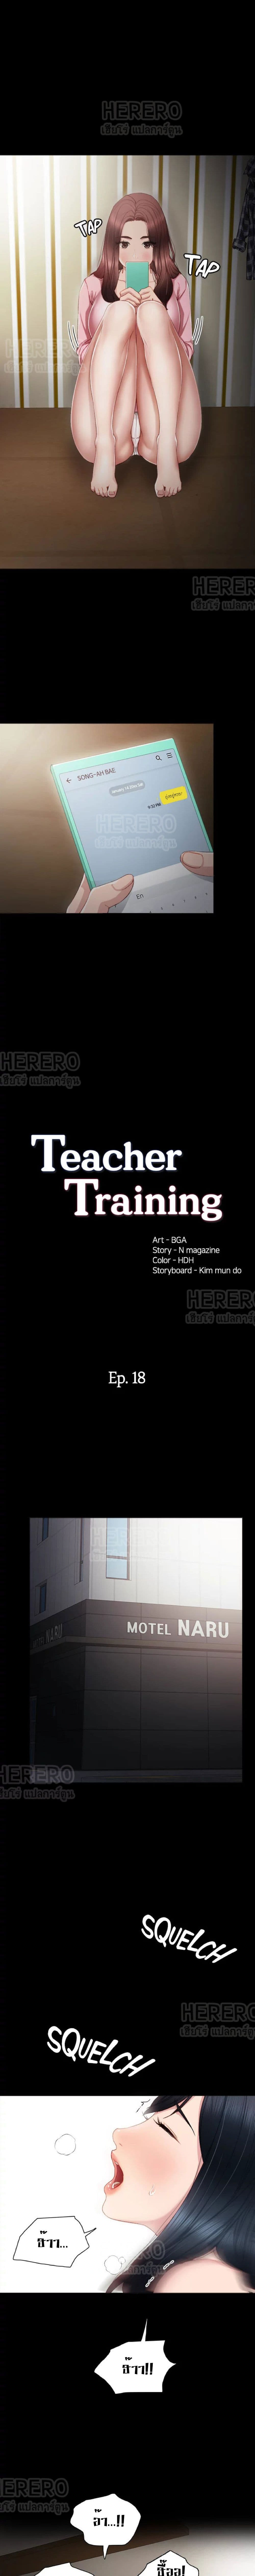 Teaching Practice 18-18